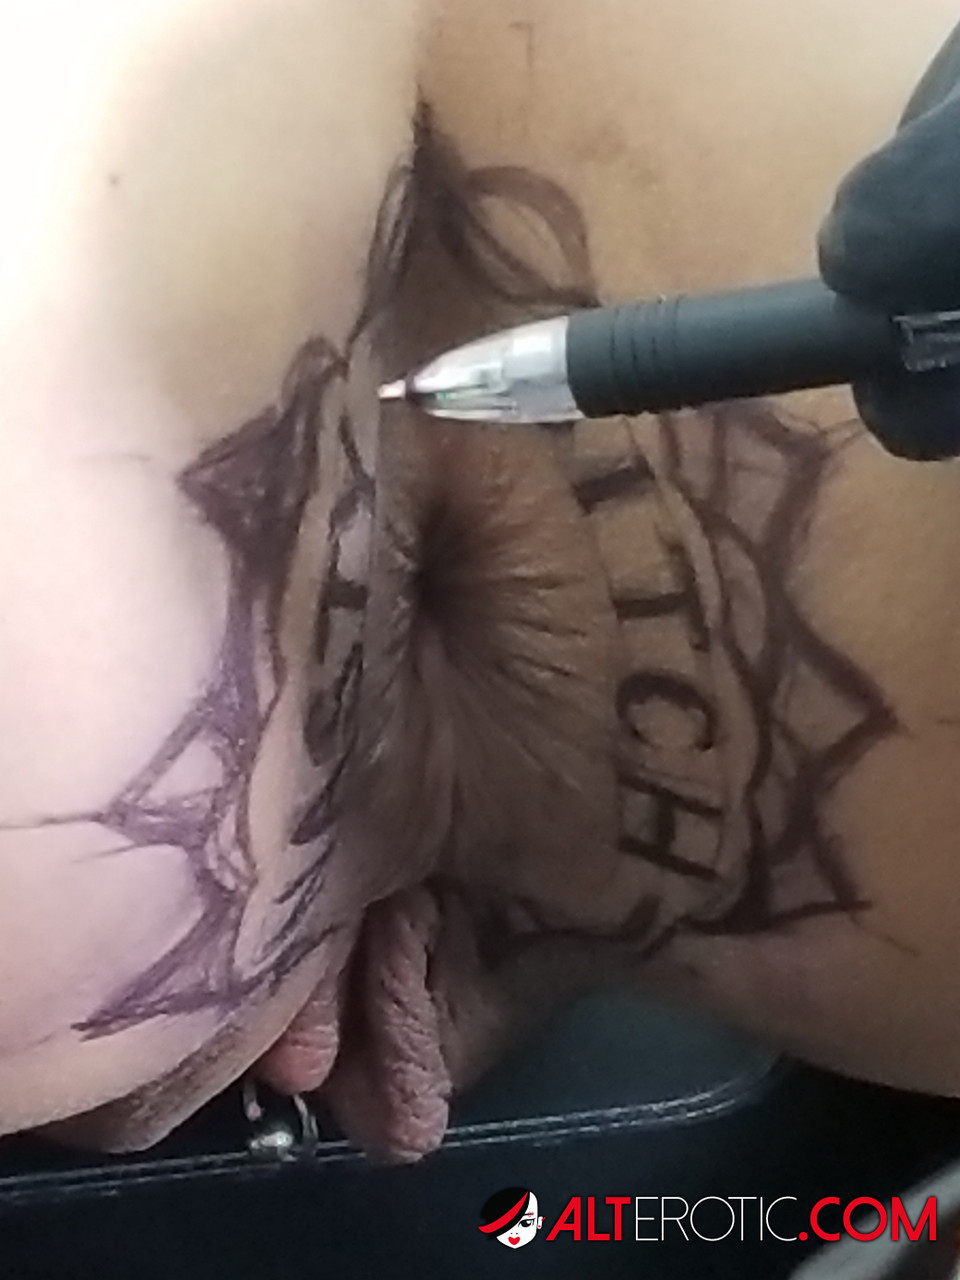 Latina chick Kitty Jaguar gets a butt tattoo before being fucked porno fotoğrafı #424168451 | Alt Erotic Pics, Kitty Jaguar, Tattoo, mobil porno